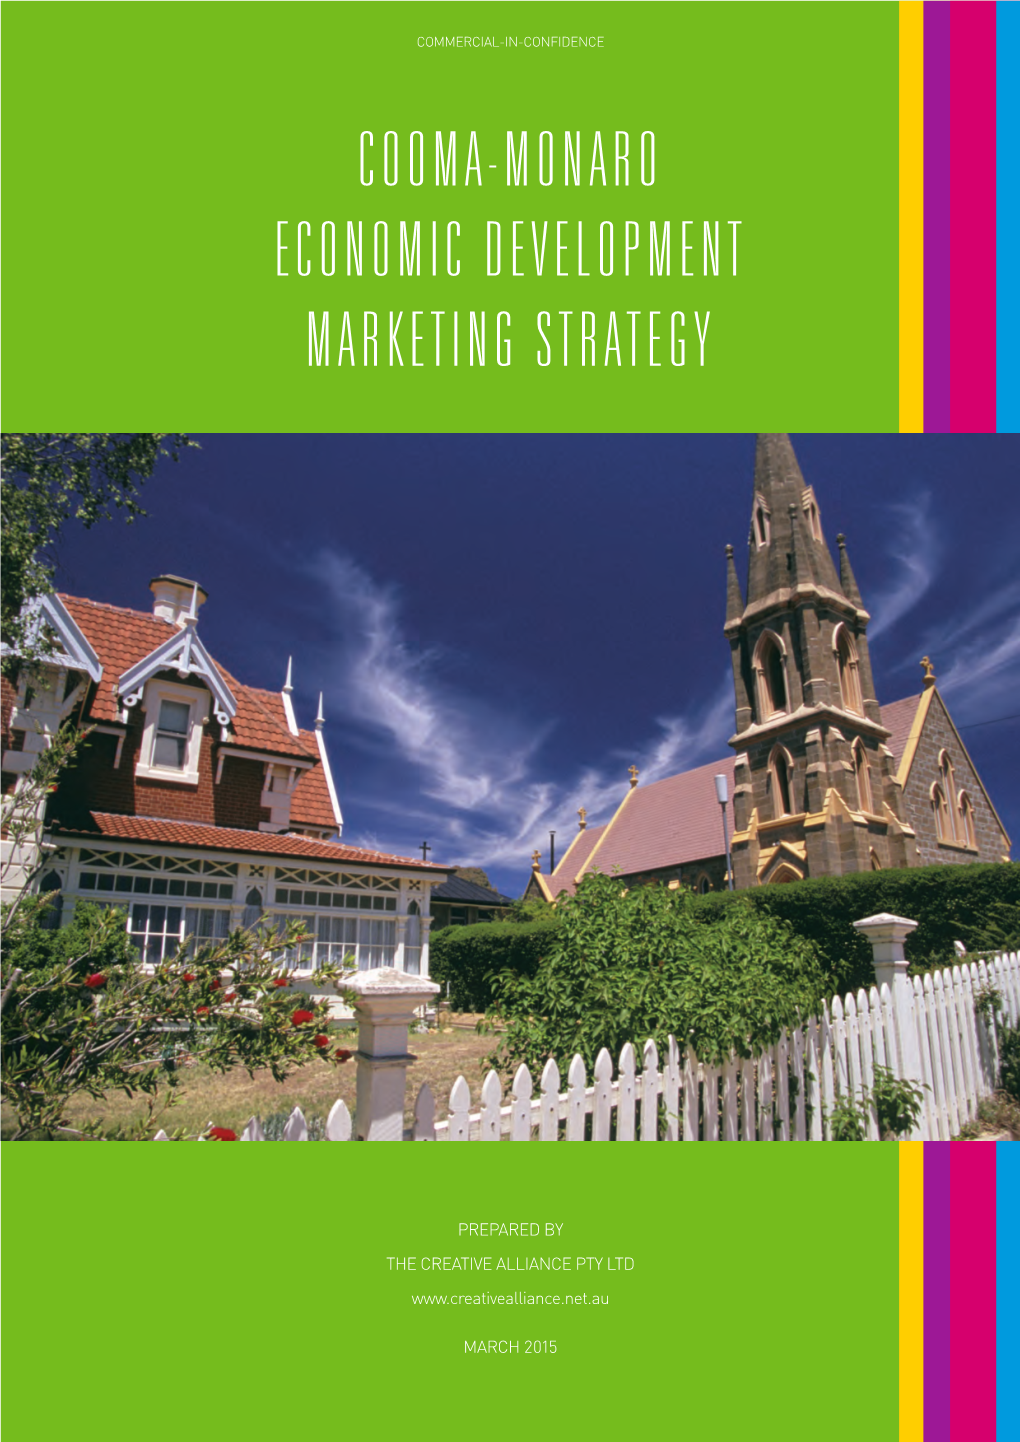 Cooma-Monaro Economic Development Marketing Strategy